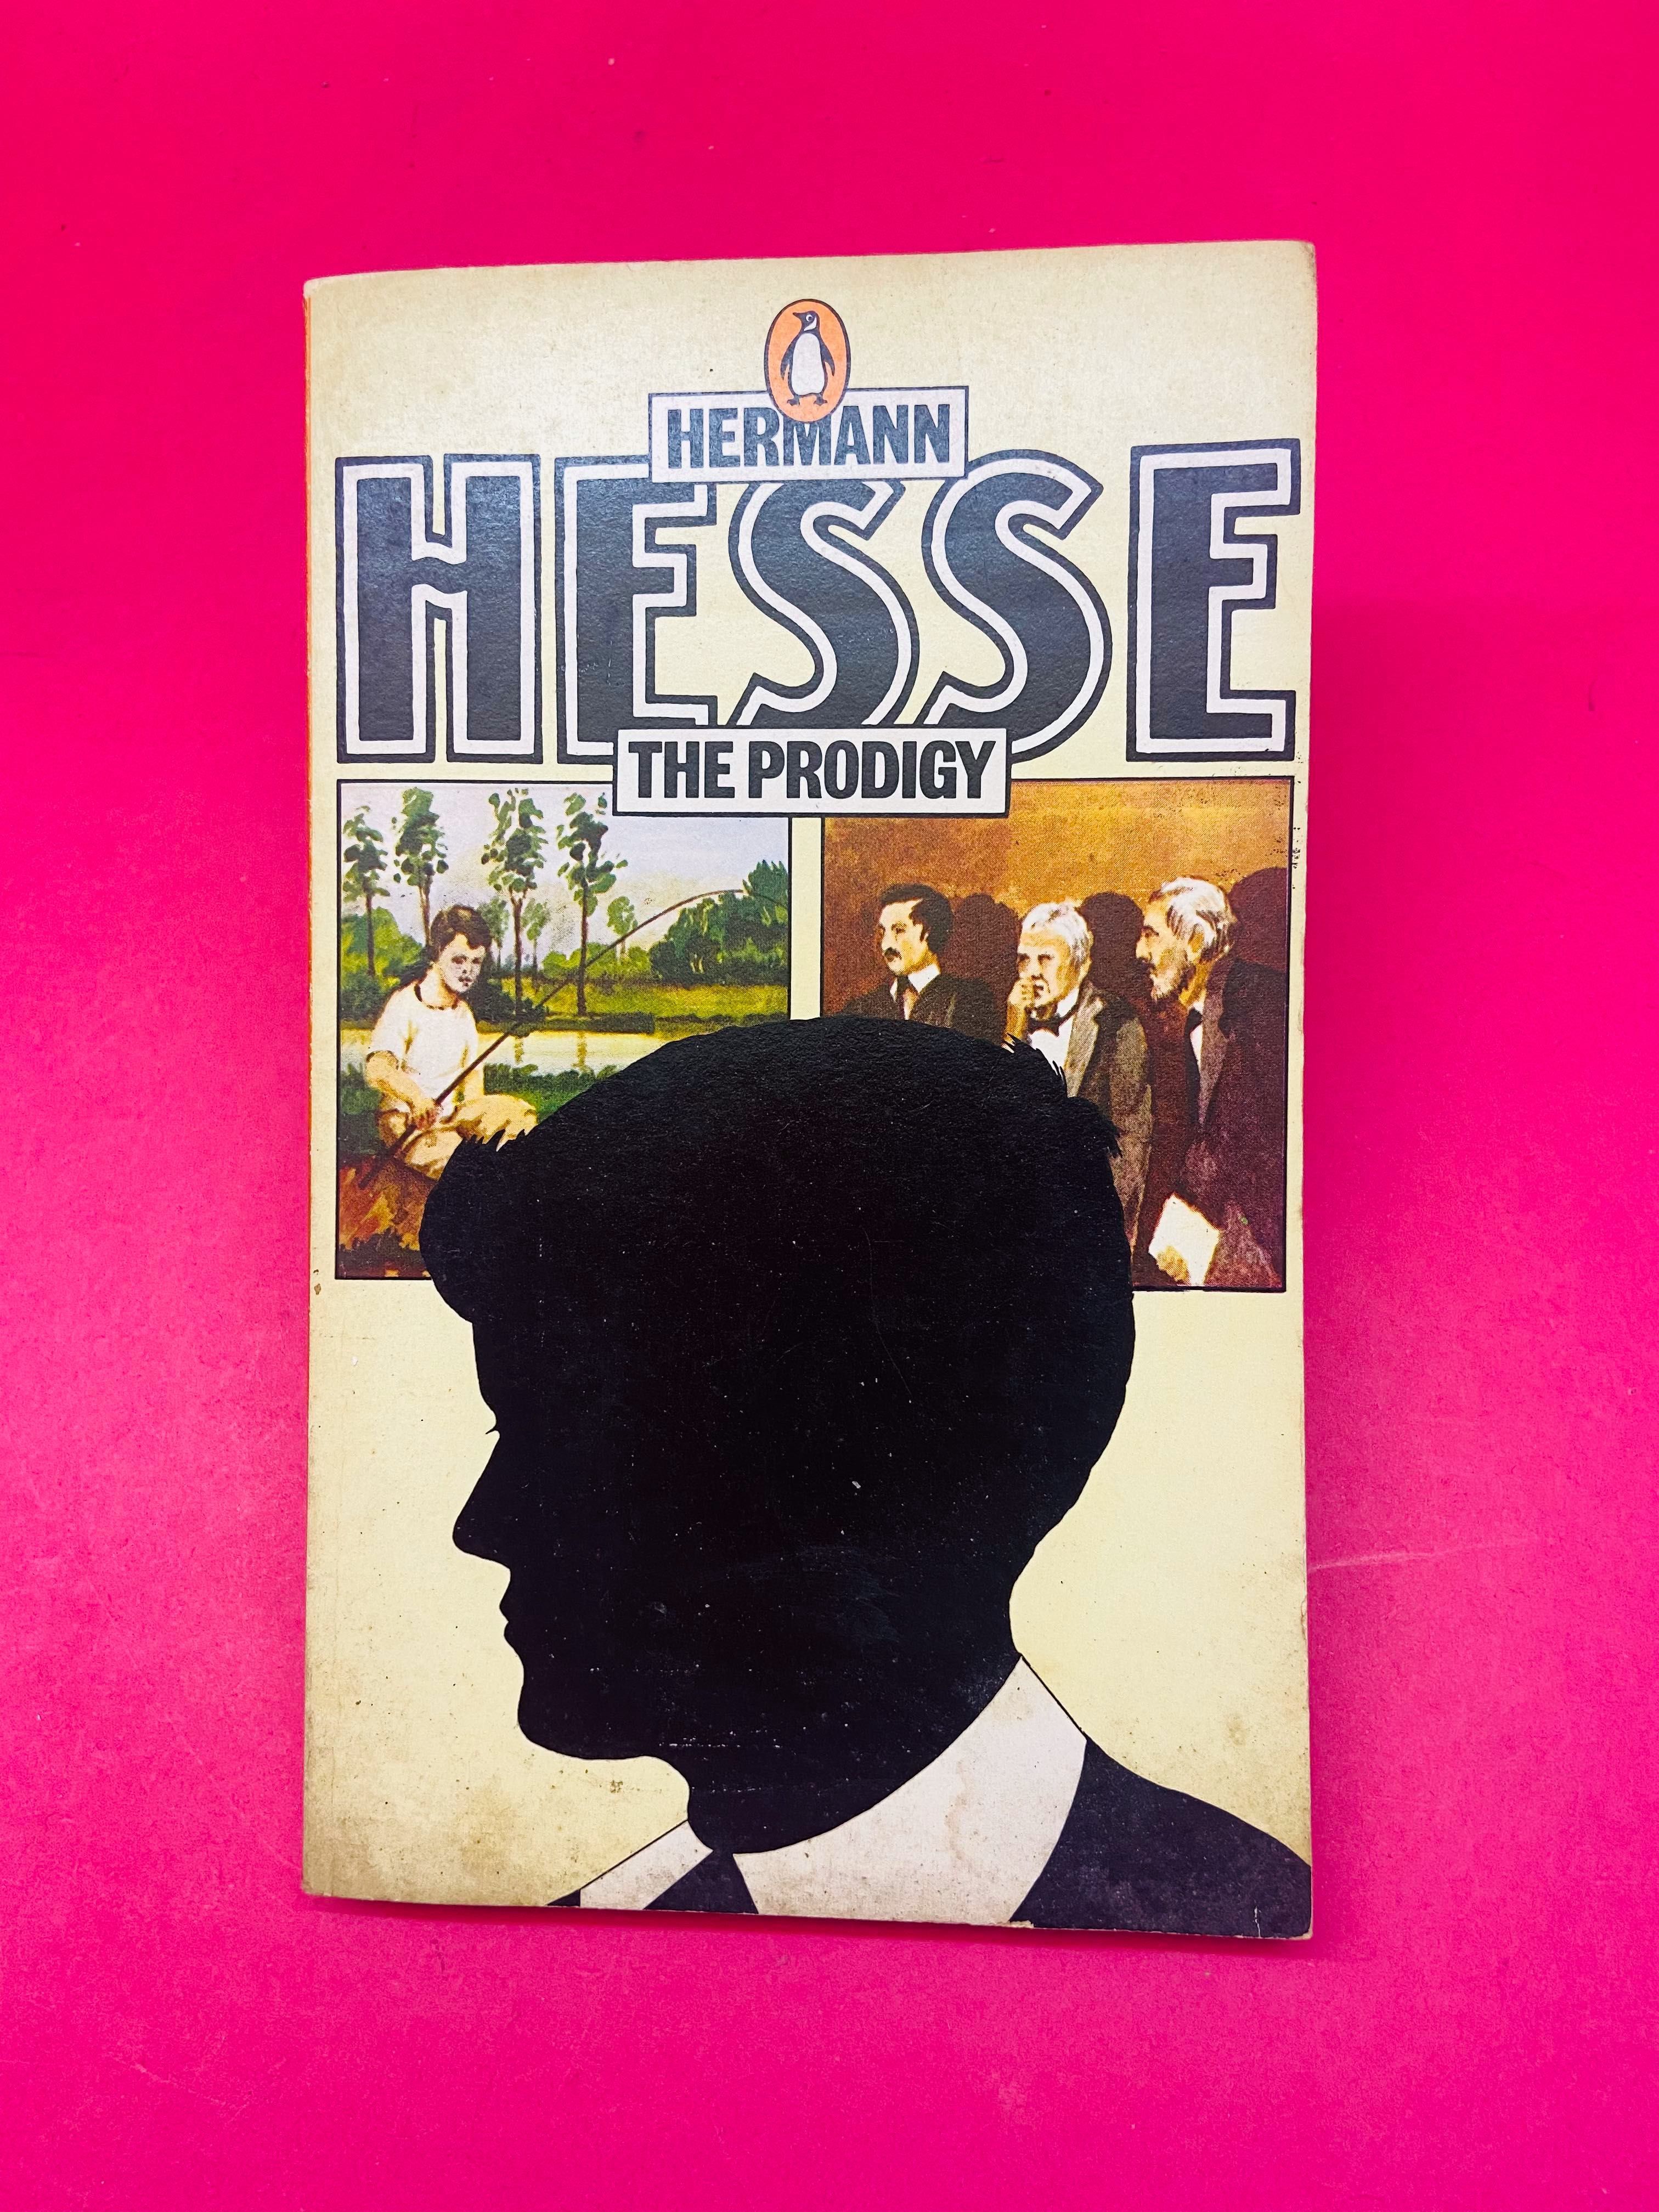 The Prodigy - Herman Hesse